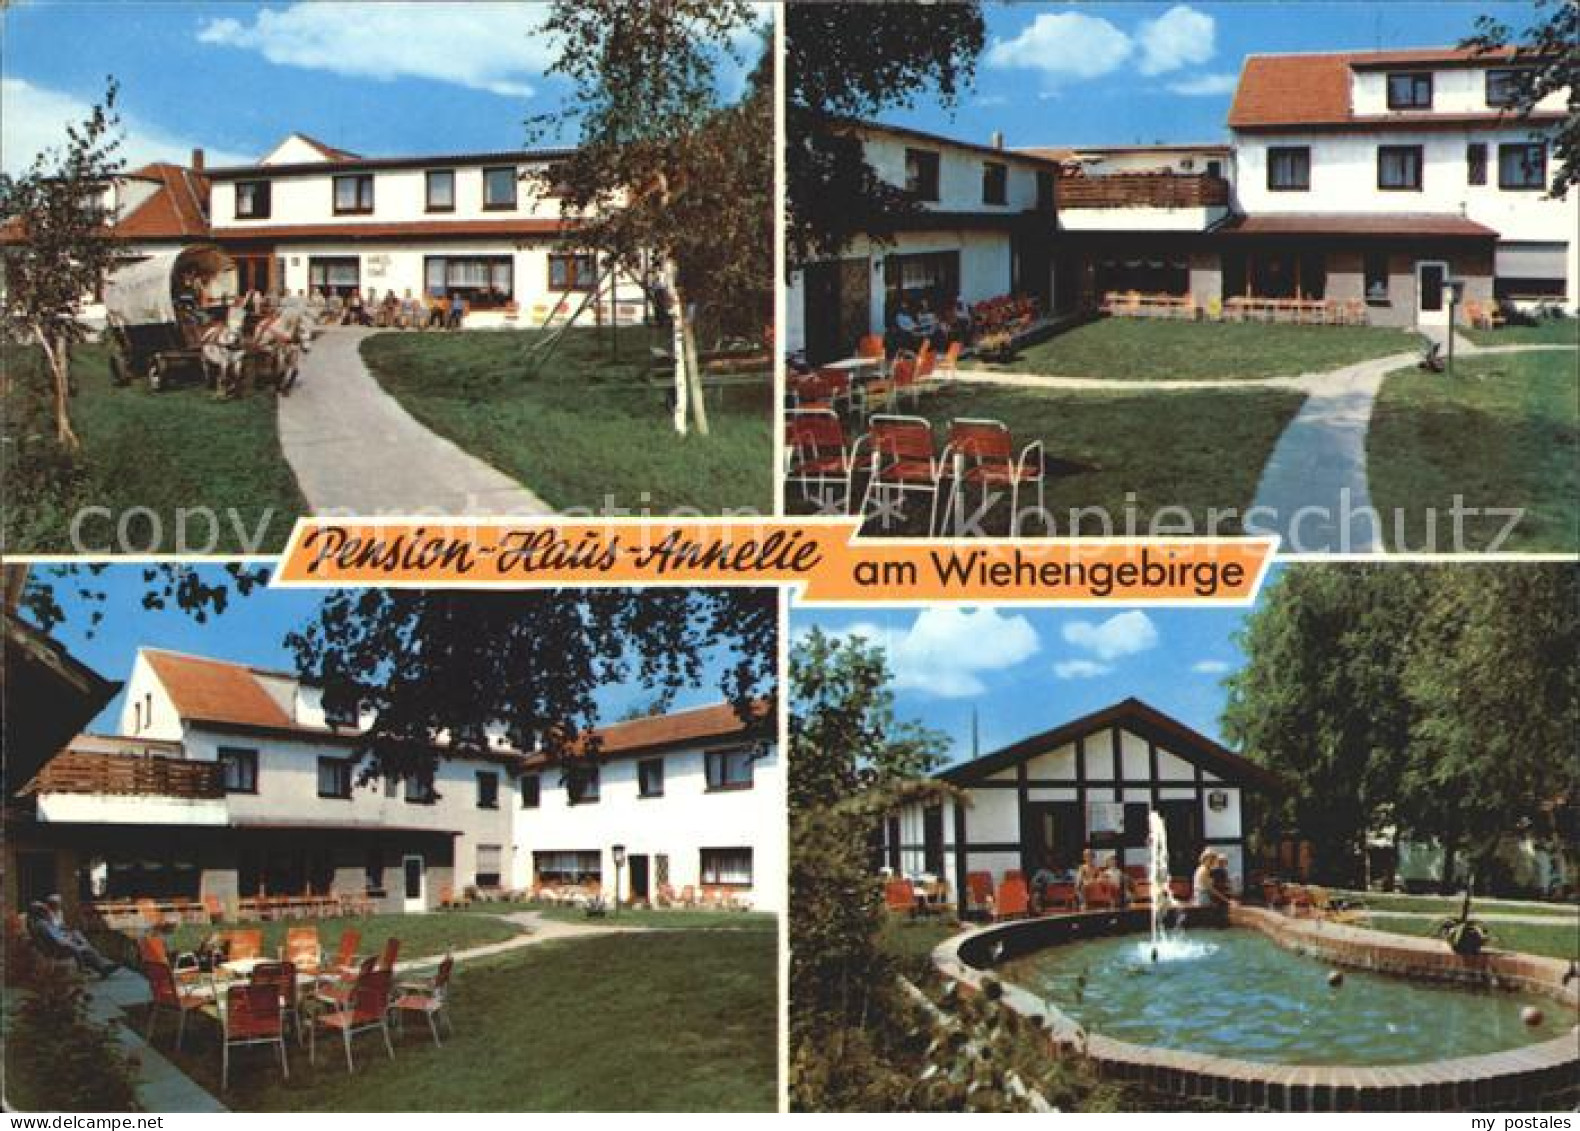 72014766 Bad Holzhausen Luebbecke Pension Haus Annelie Am Wiehengebirge Boerning - Getmold